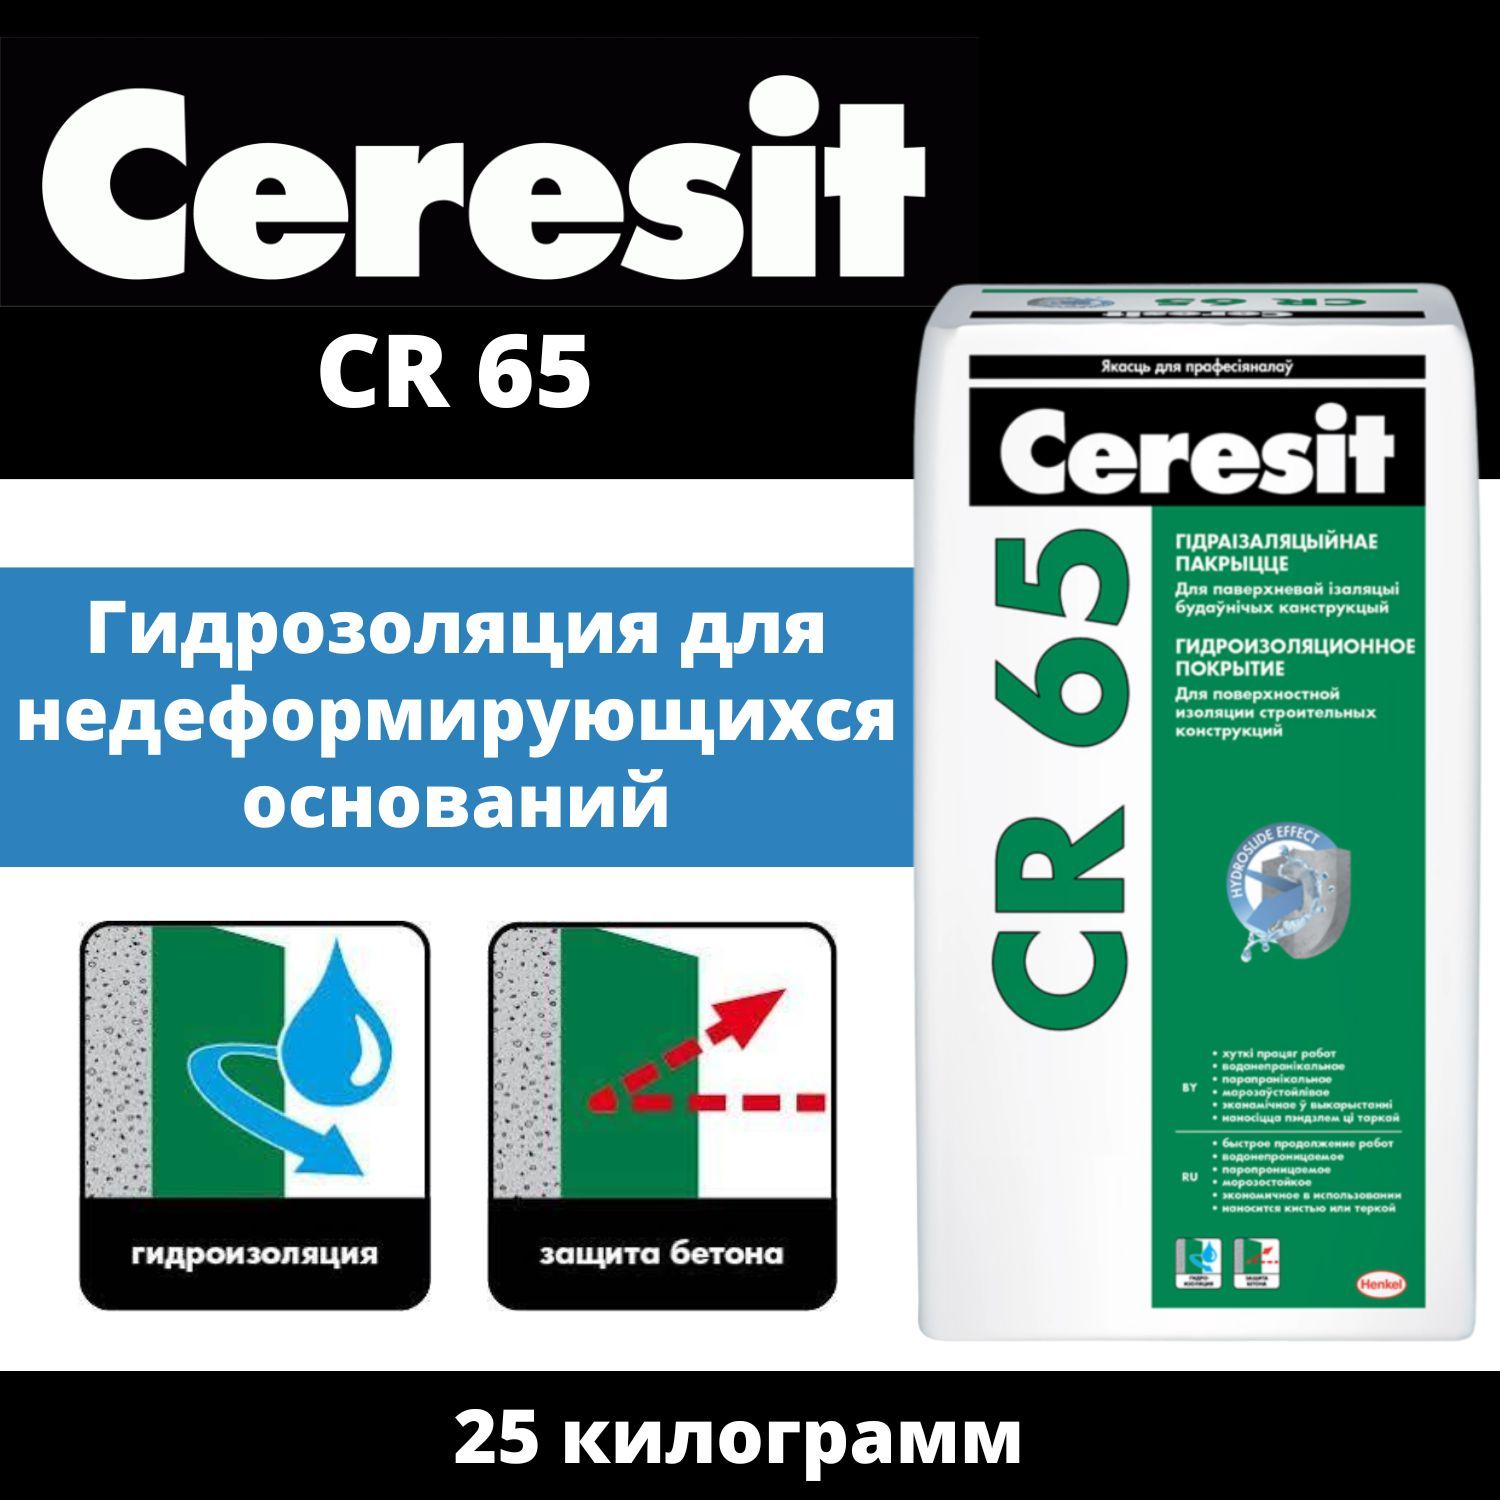 Гидроизоляция cr65. Церезит CR 65. Церезит 65 гидроизоляция. Терраса Ceresit CR 65. Гидроизоляция обмазочная цементная Ceresit CR 65 20 кг.